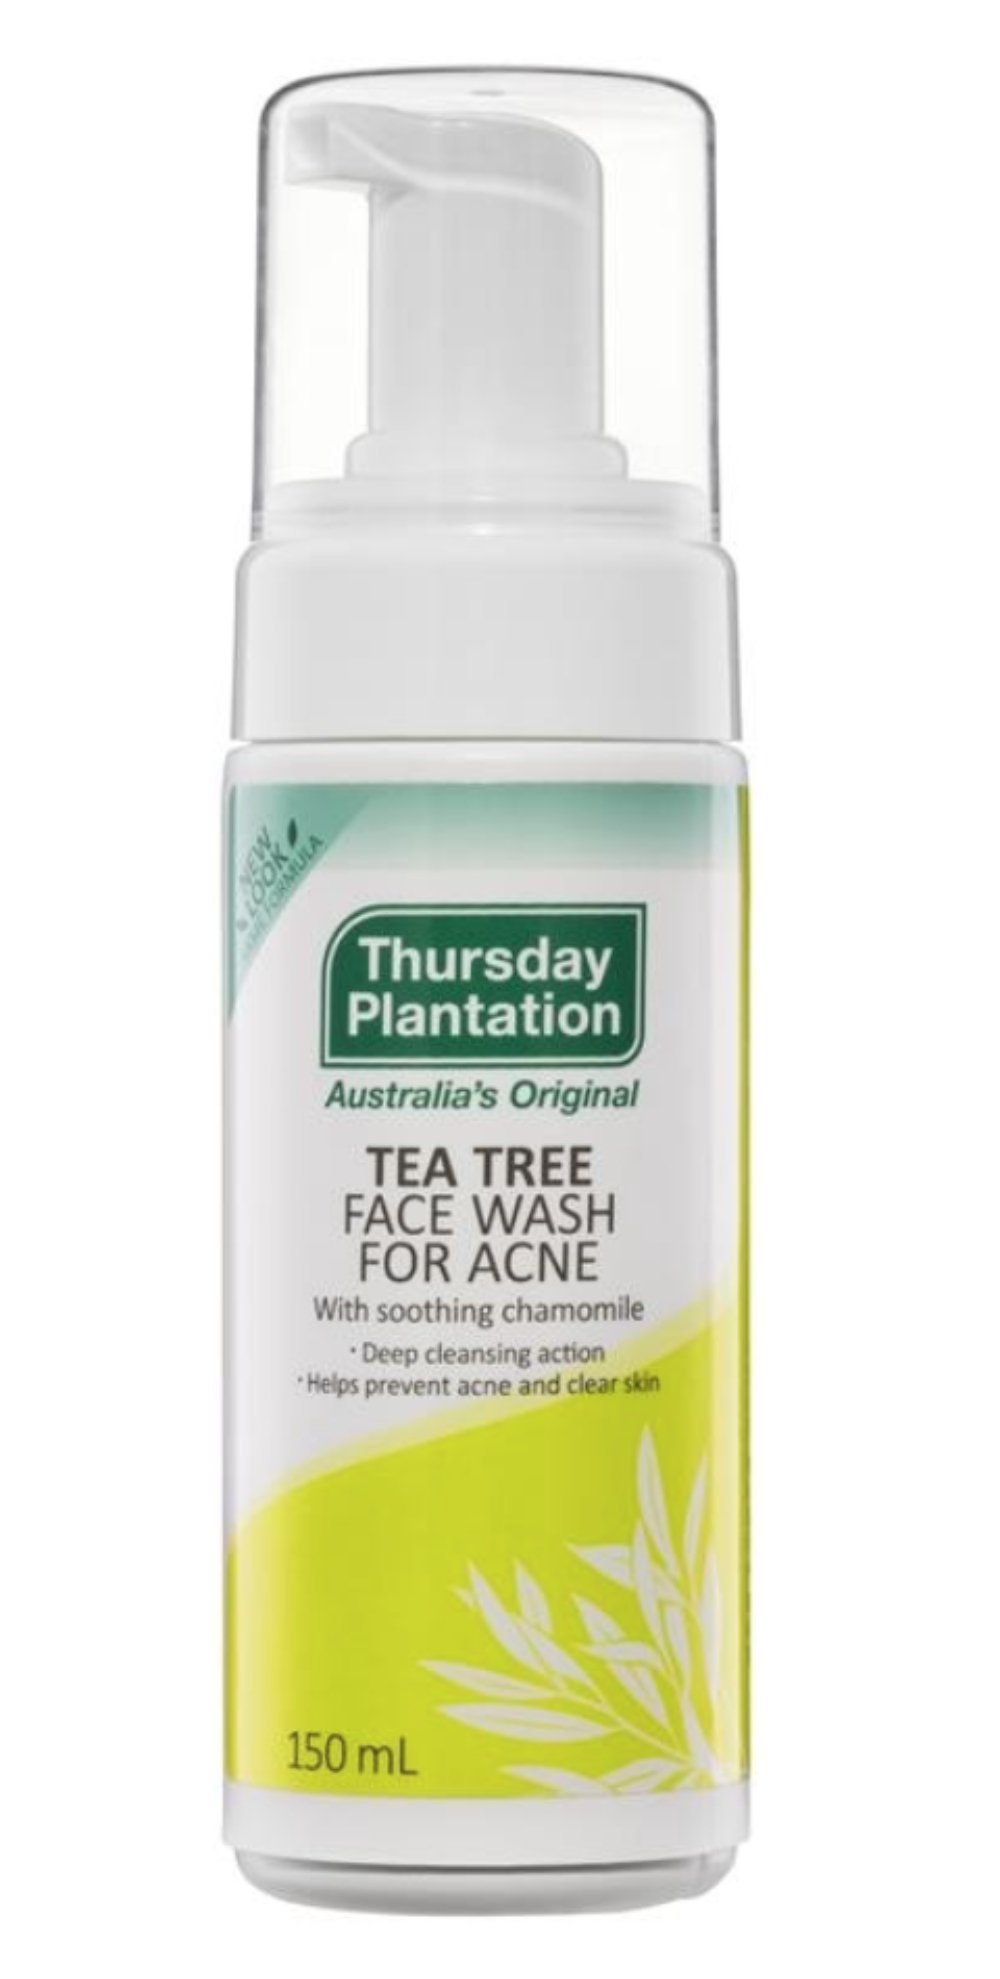 Thursday Plantation Tea Tree Face Wash For Acne 150ml - The Face Method